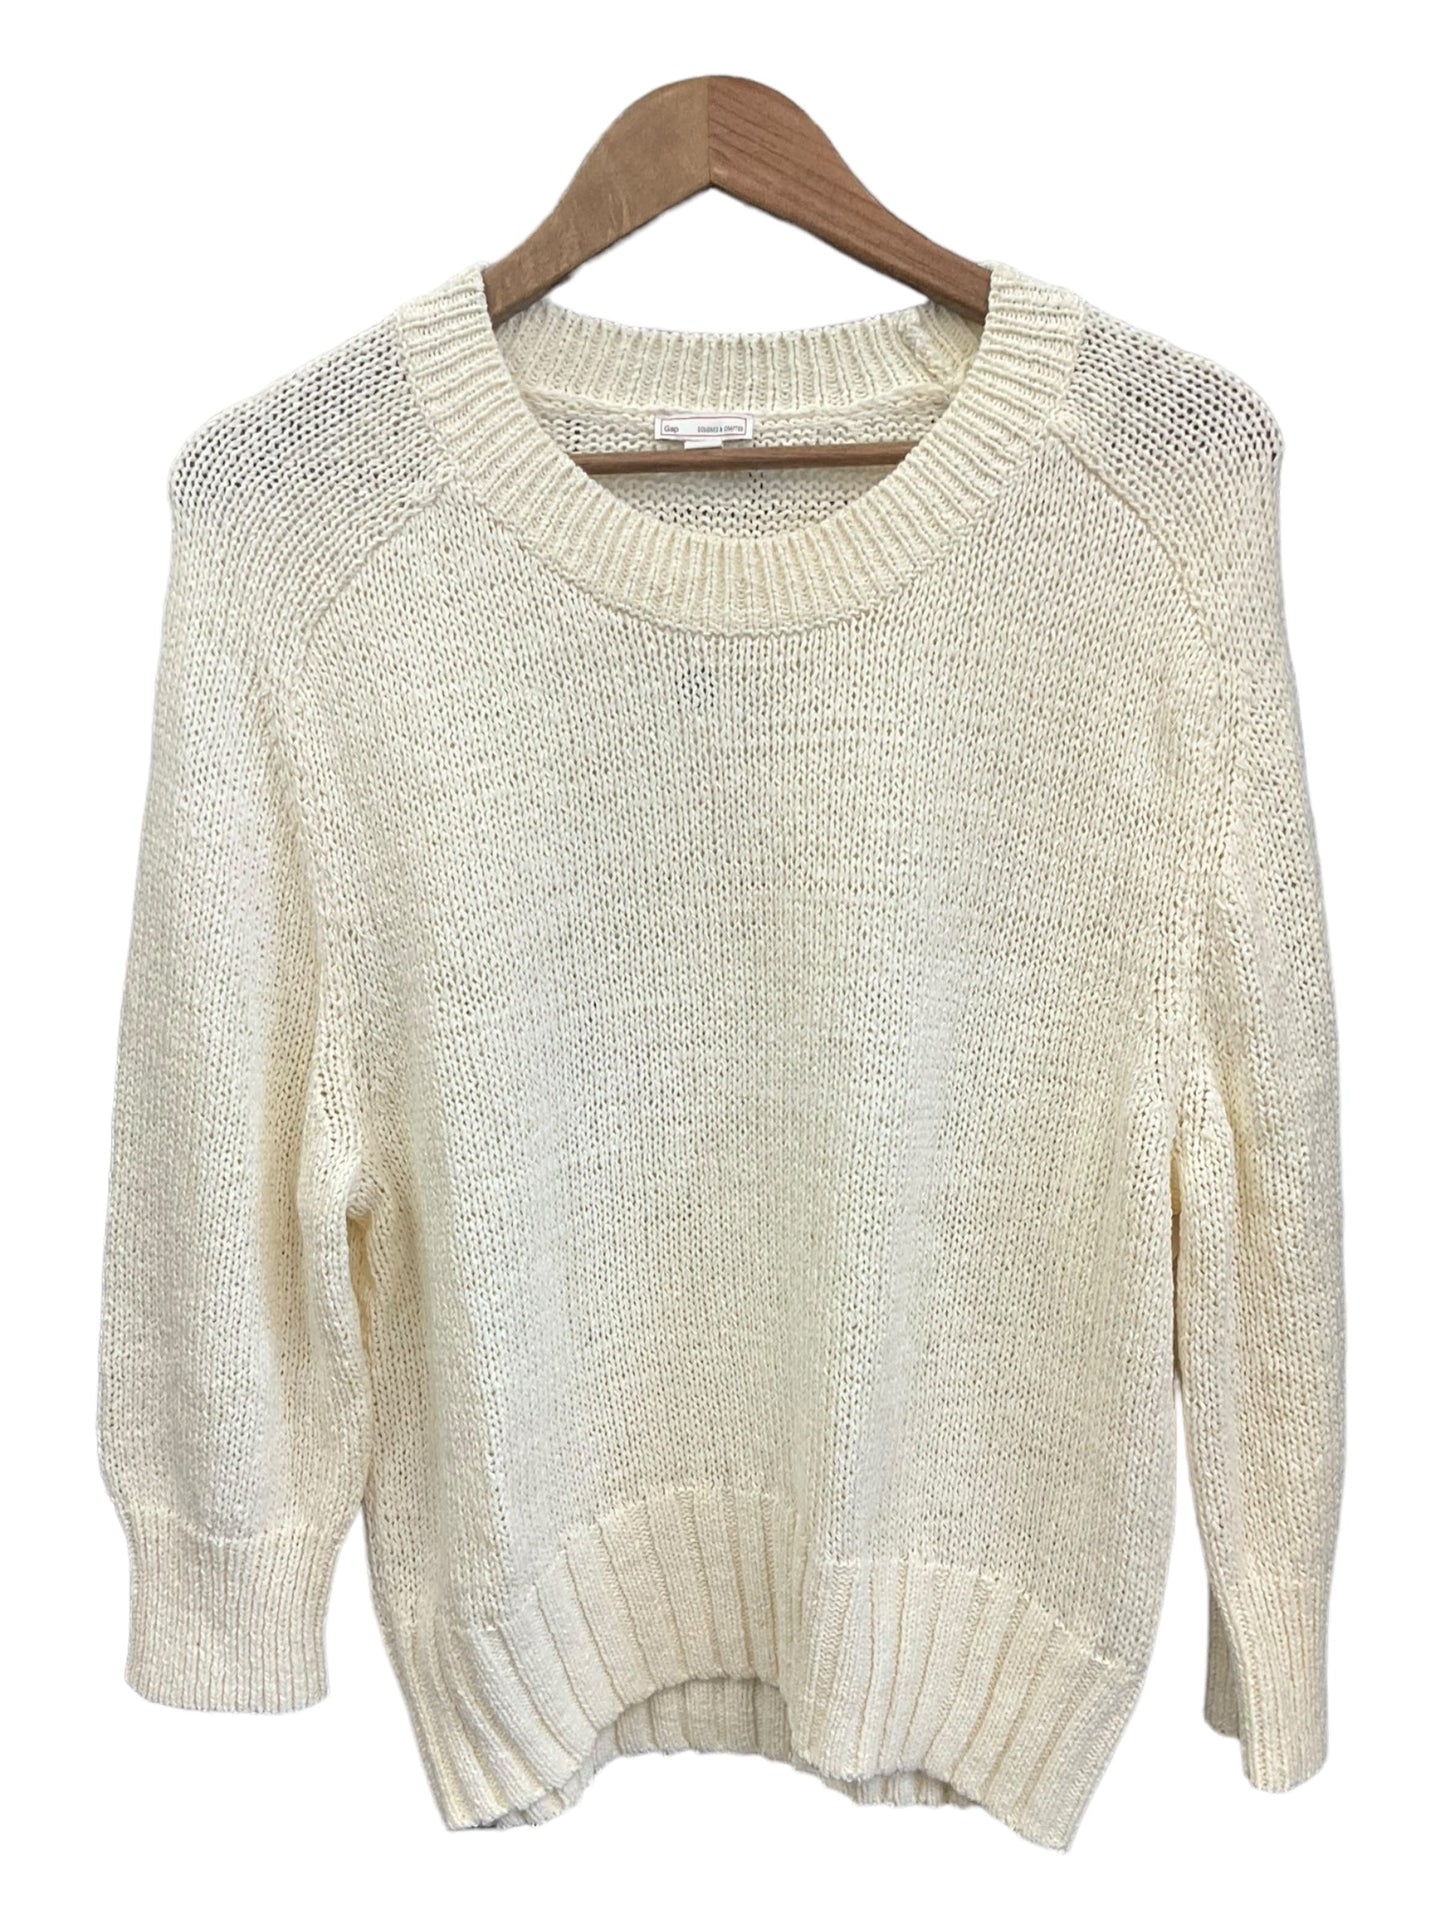 Sweater By Gap  Size: L